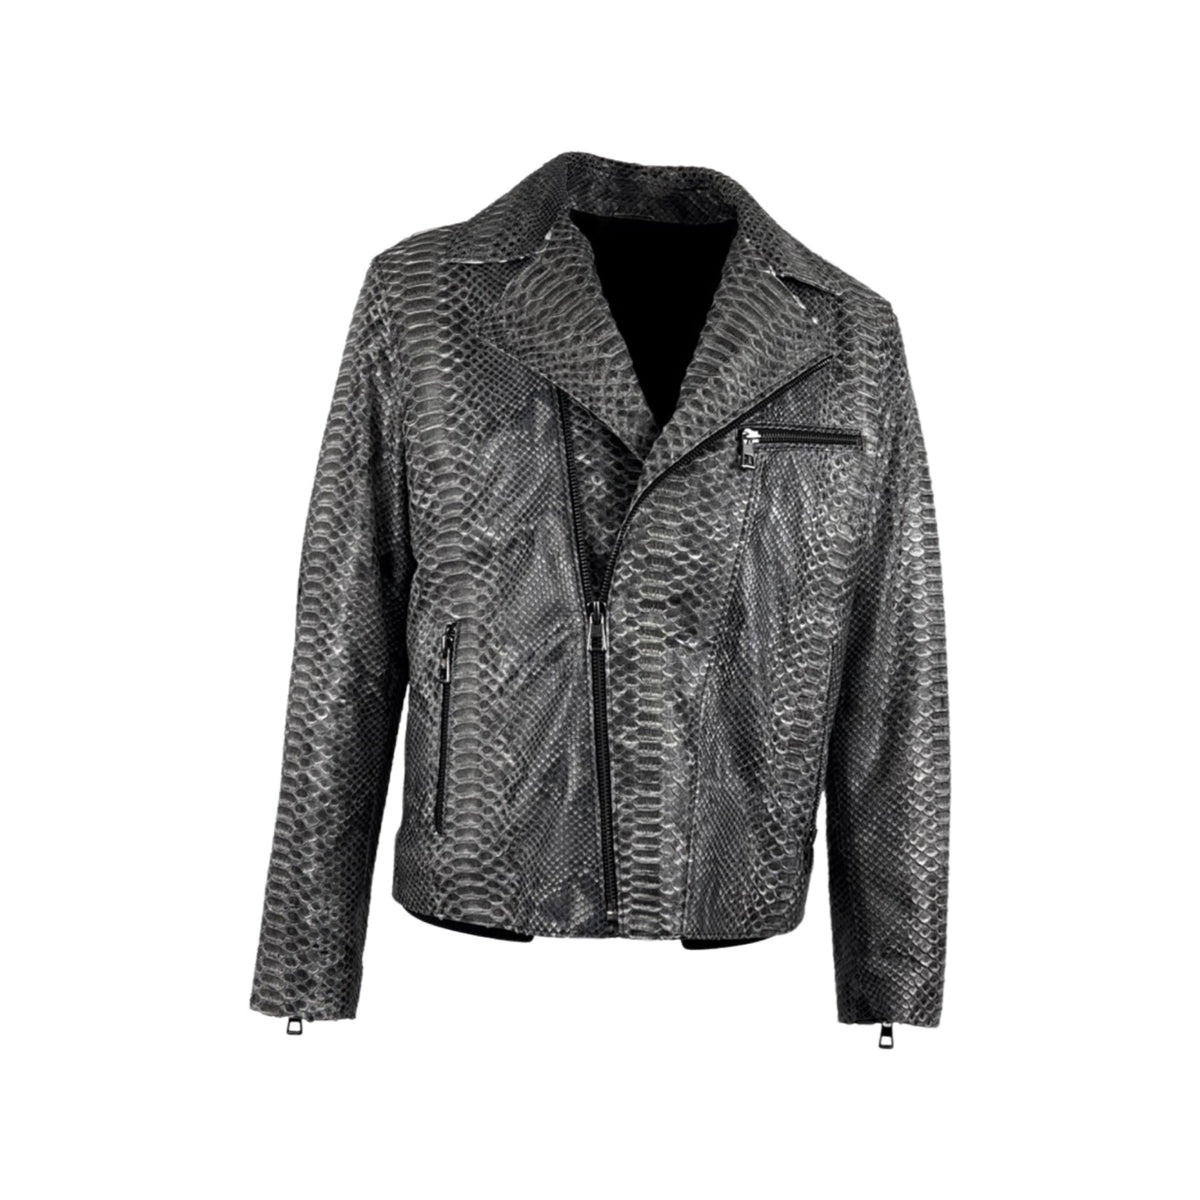 Womens Snakeskin Jacket Python Leather Jacket Black Glossy 